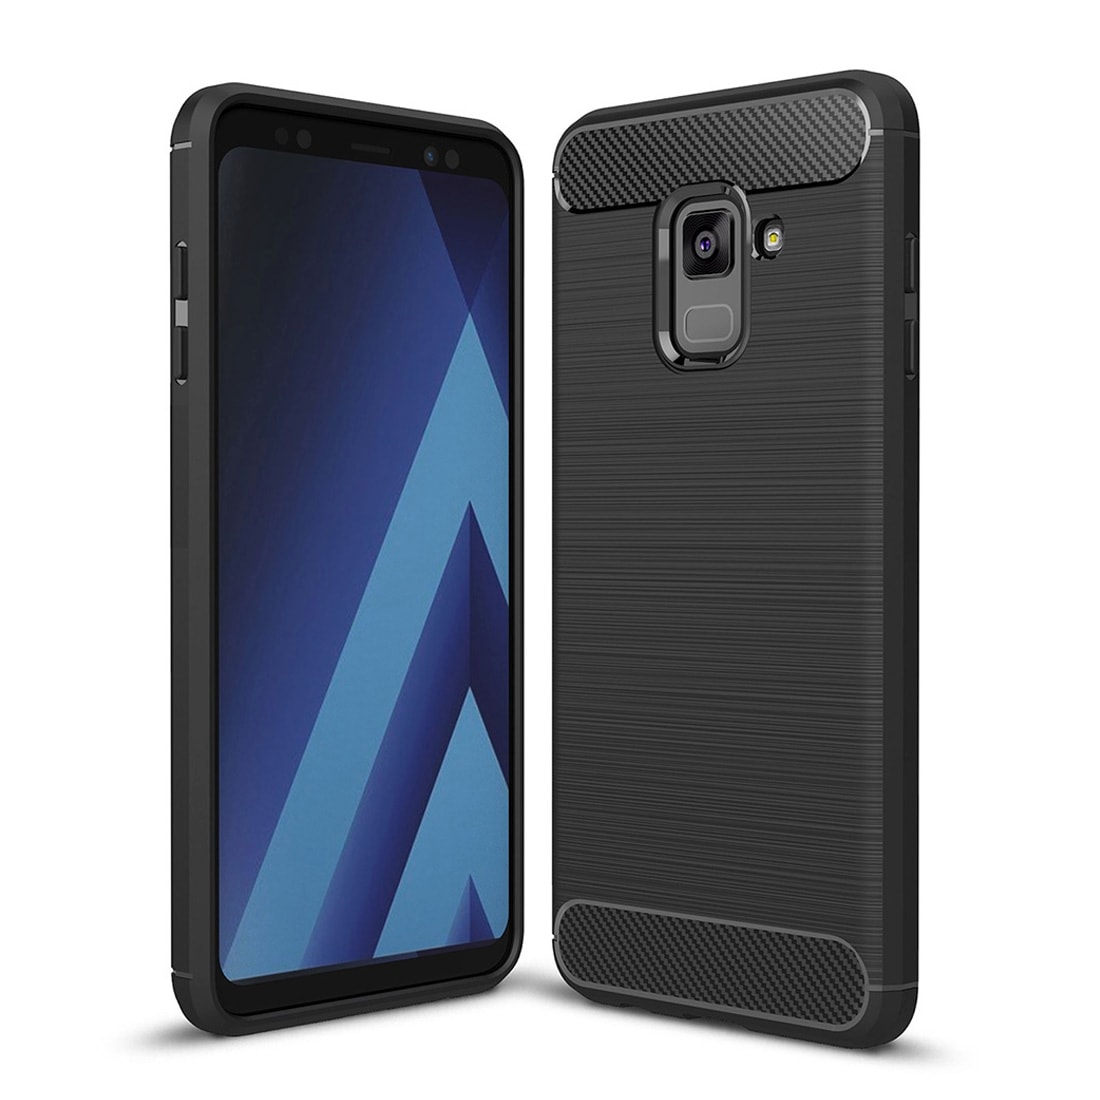 Karbonfiber / mobilfutteral for Samsung Galaxy A8 2018